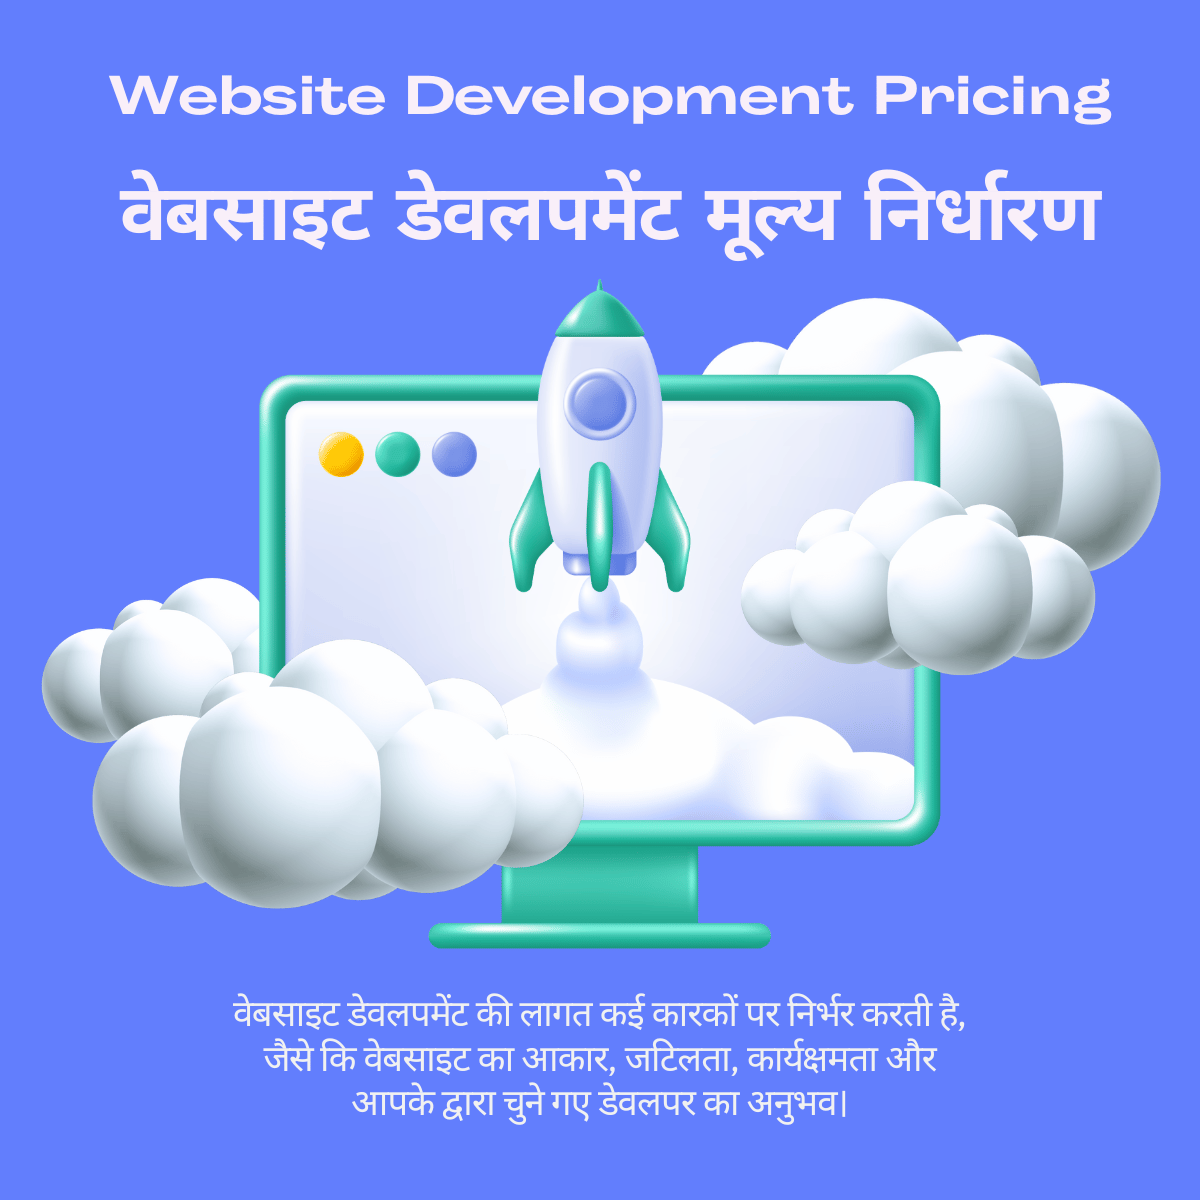 Website Development Pricing वेबसाइट डेवलपमेंट मूल्य निर्धारण